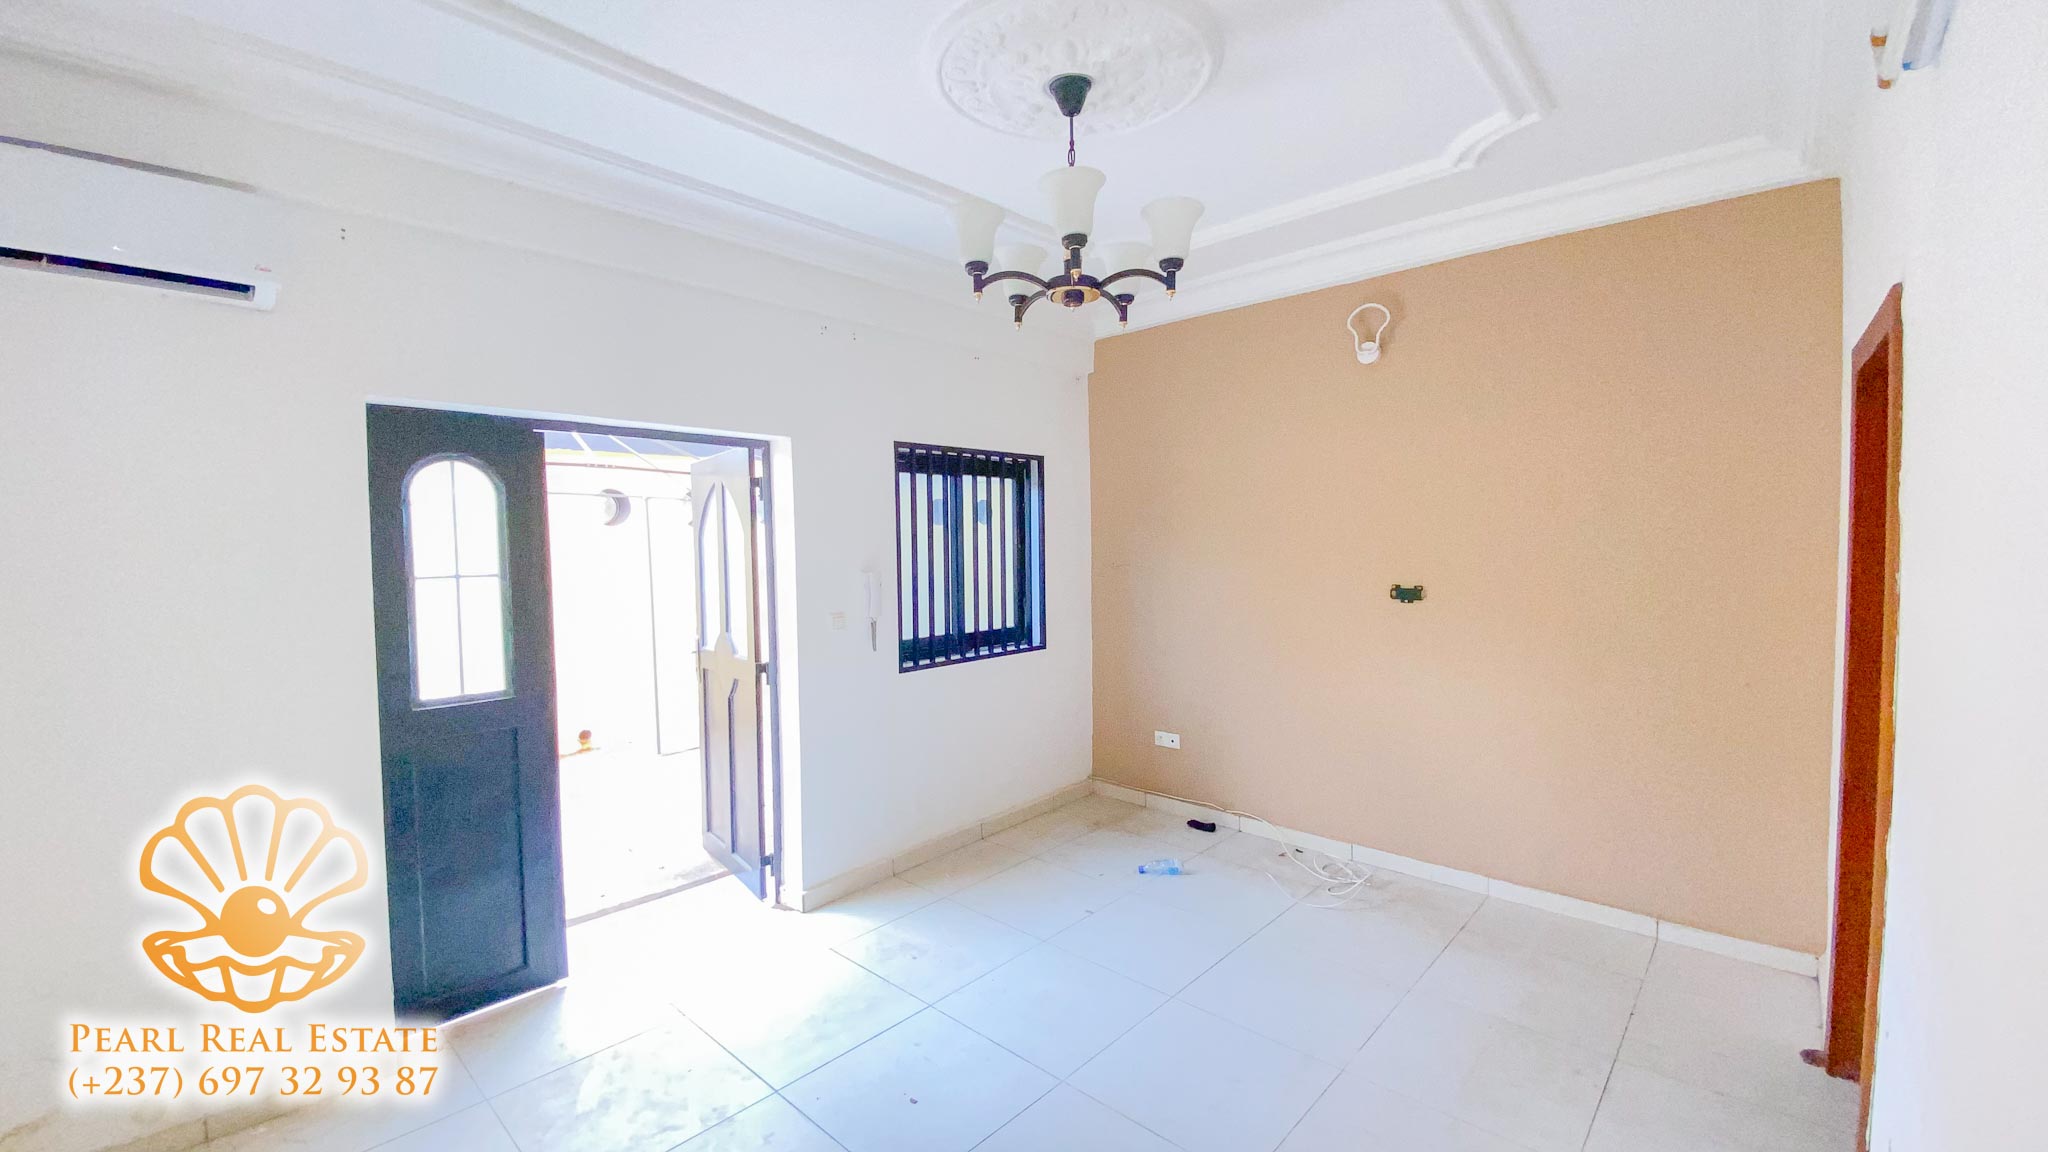 Apartment to rent - Yaoundé, Bastos, Derrière usine Bastos - 1 living room(s), 1 bedroom(s), 1 bathroom(s) - 300 000 FCFA / month